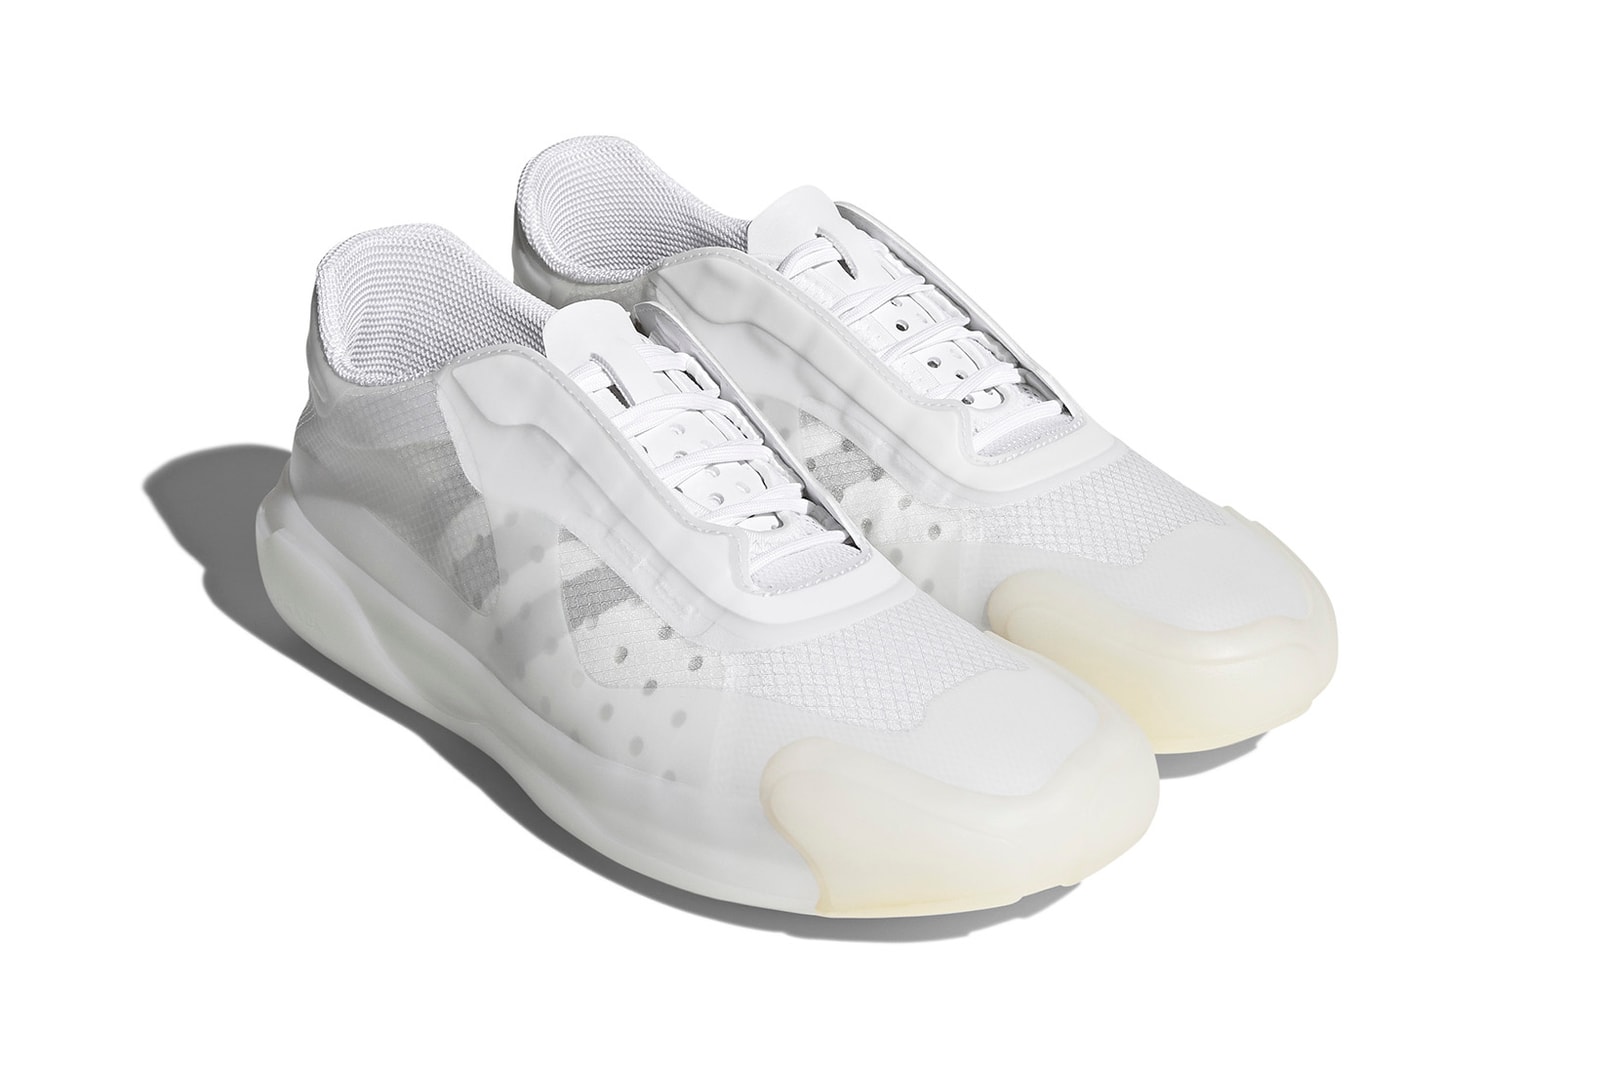 Prada x adidas Sneaker Collaboration Luna Rossa 21 White